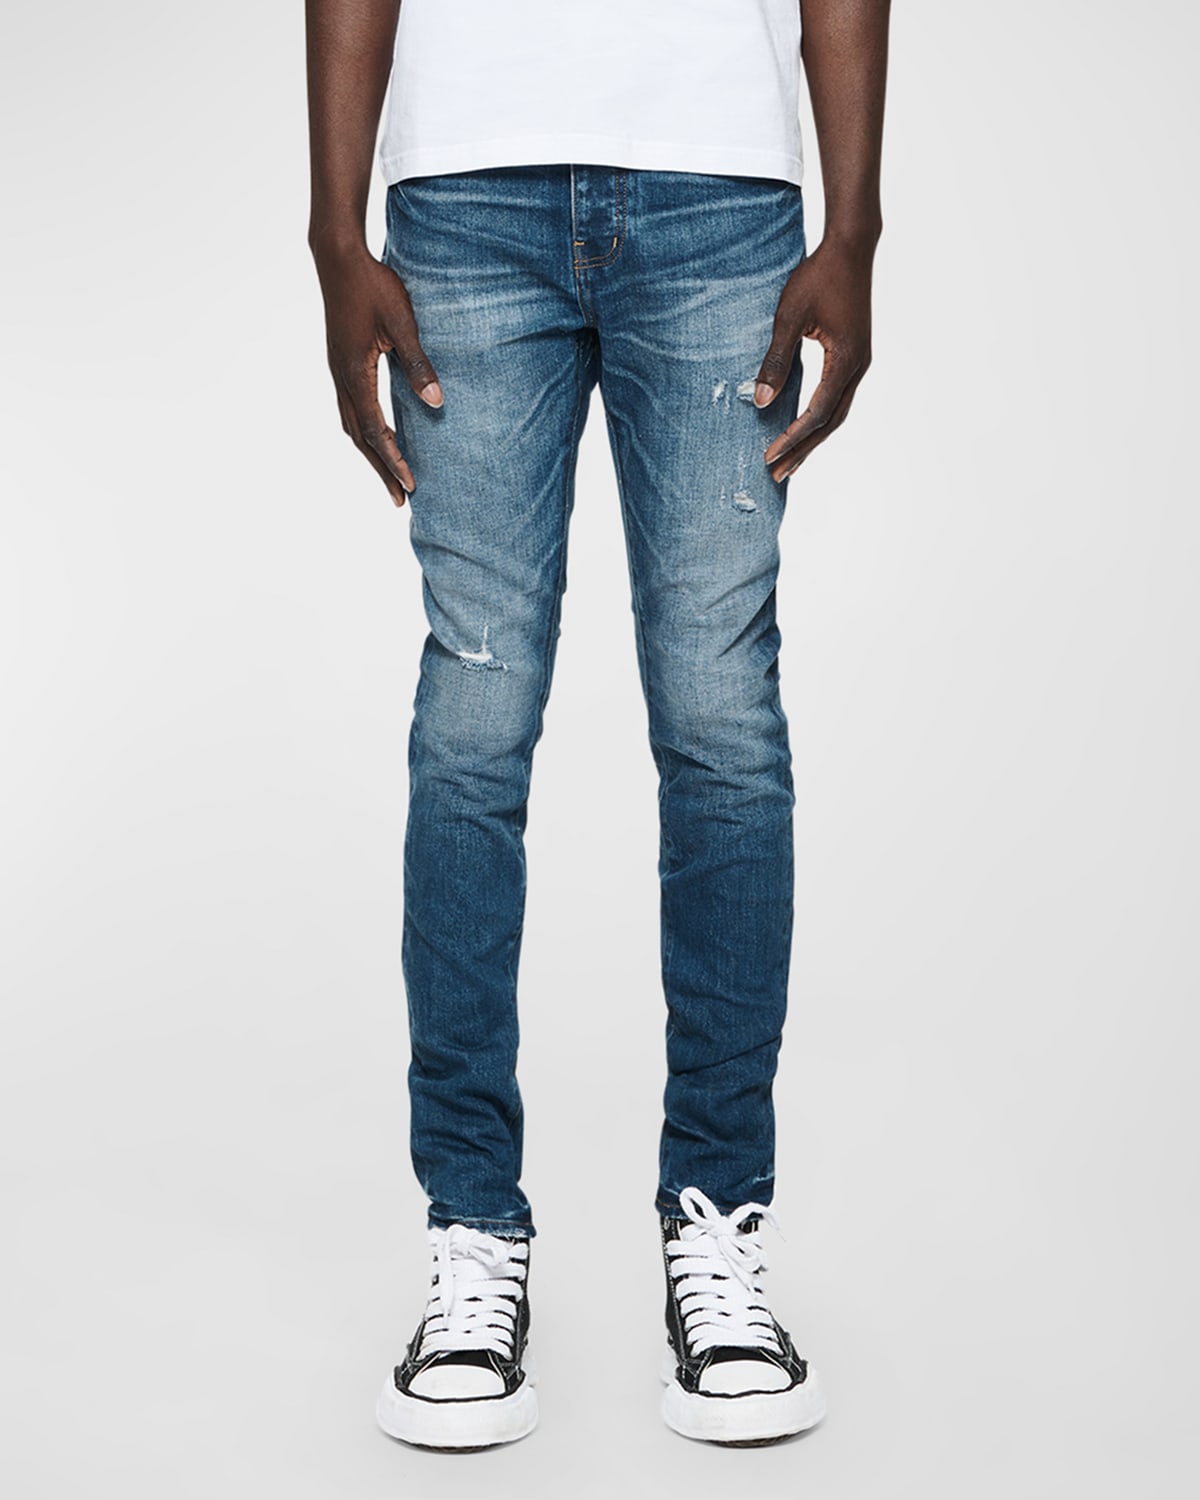 Men's P001 One Year Worn Skinny Jeans